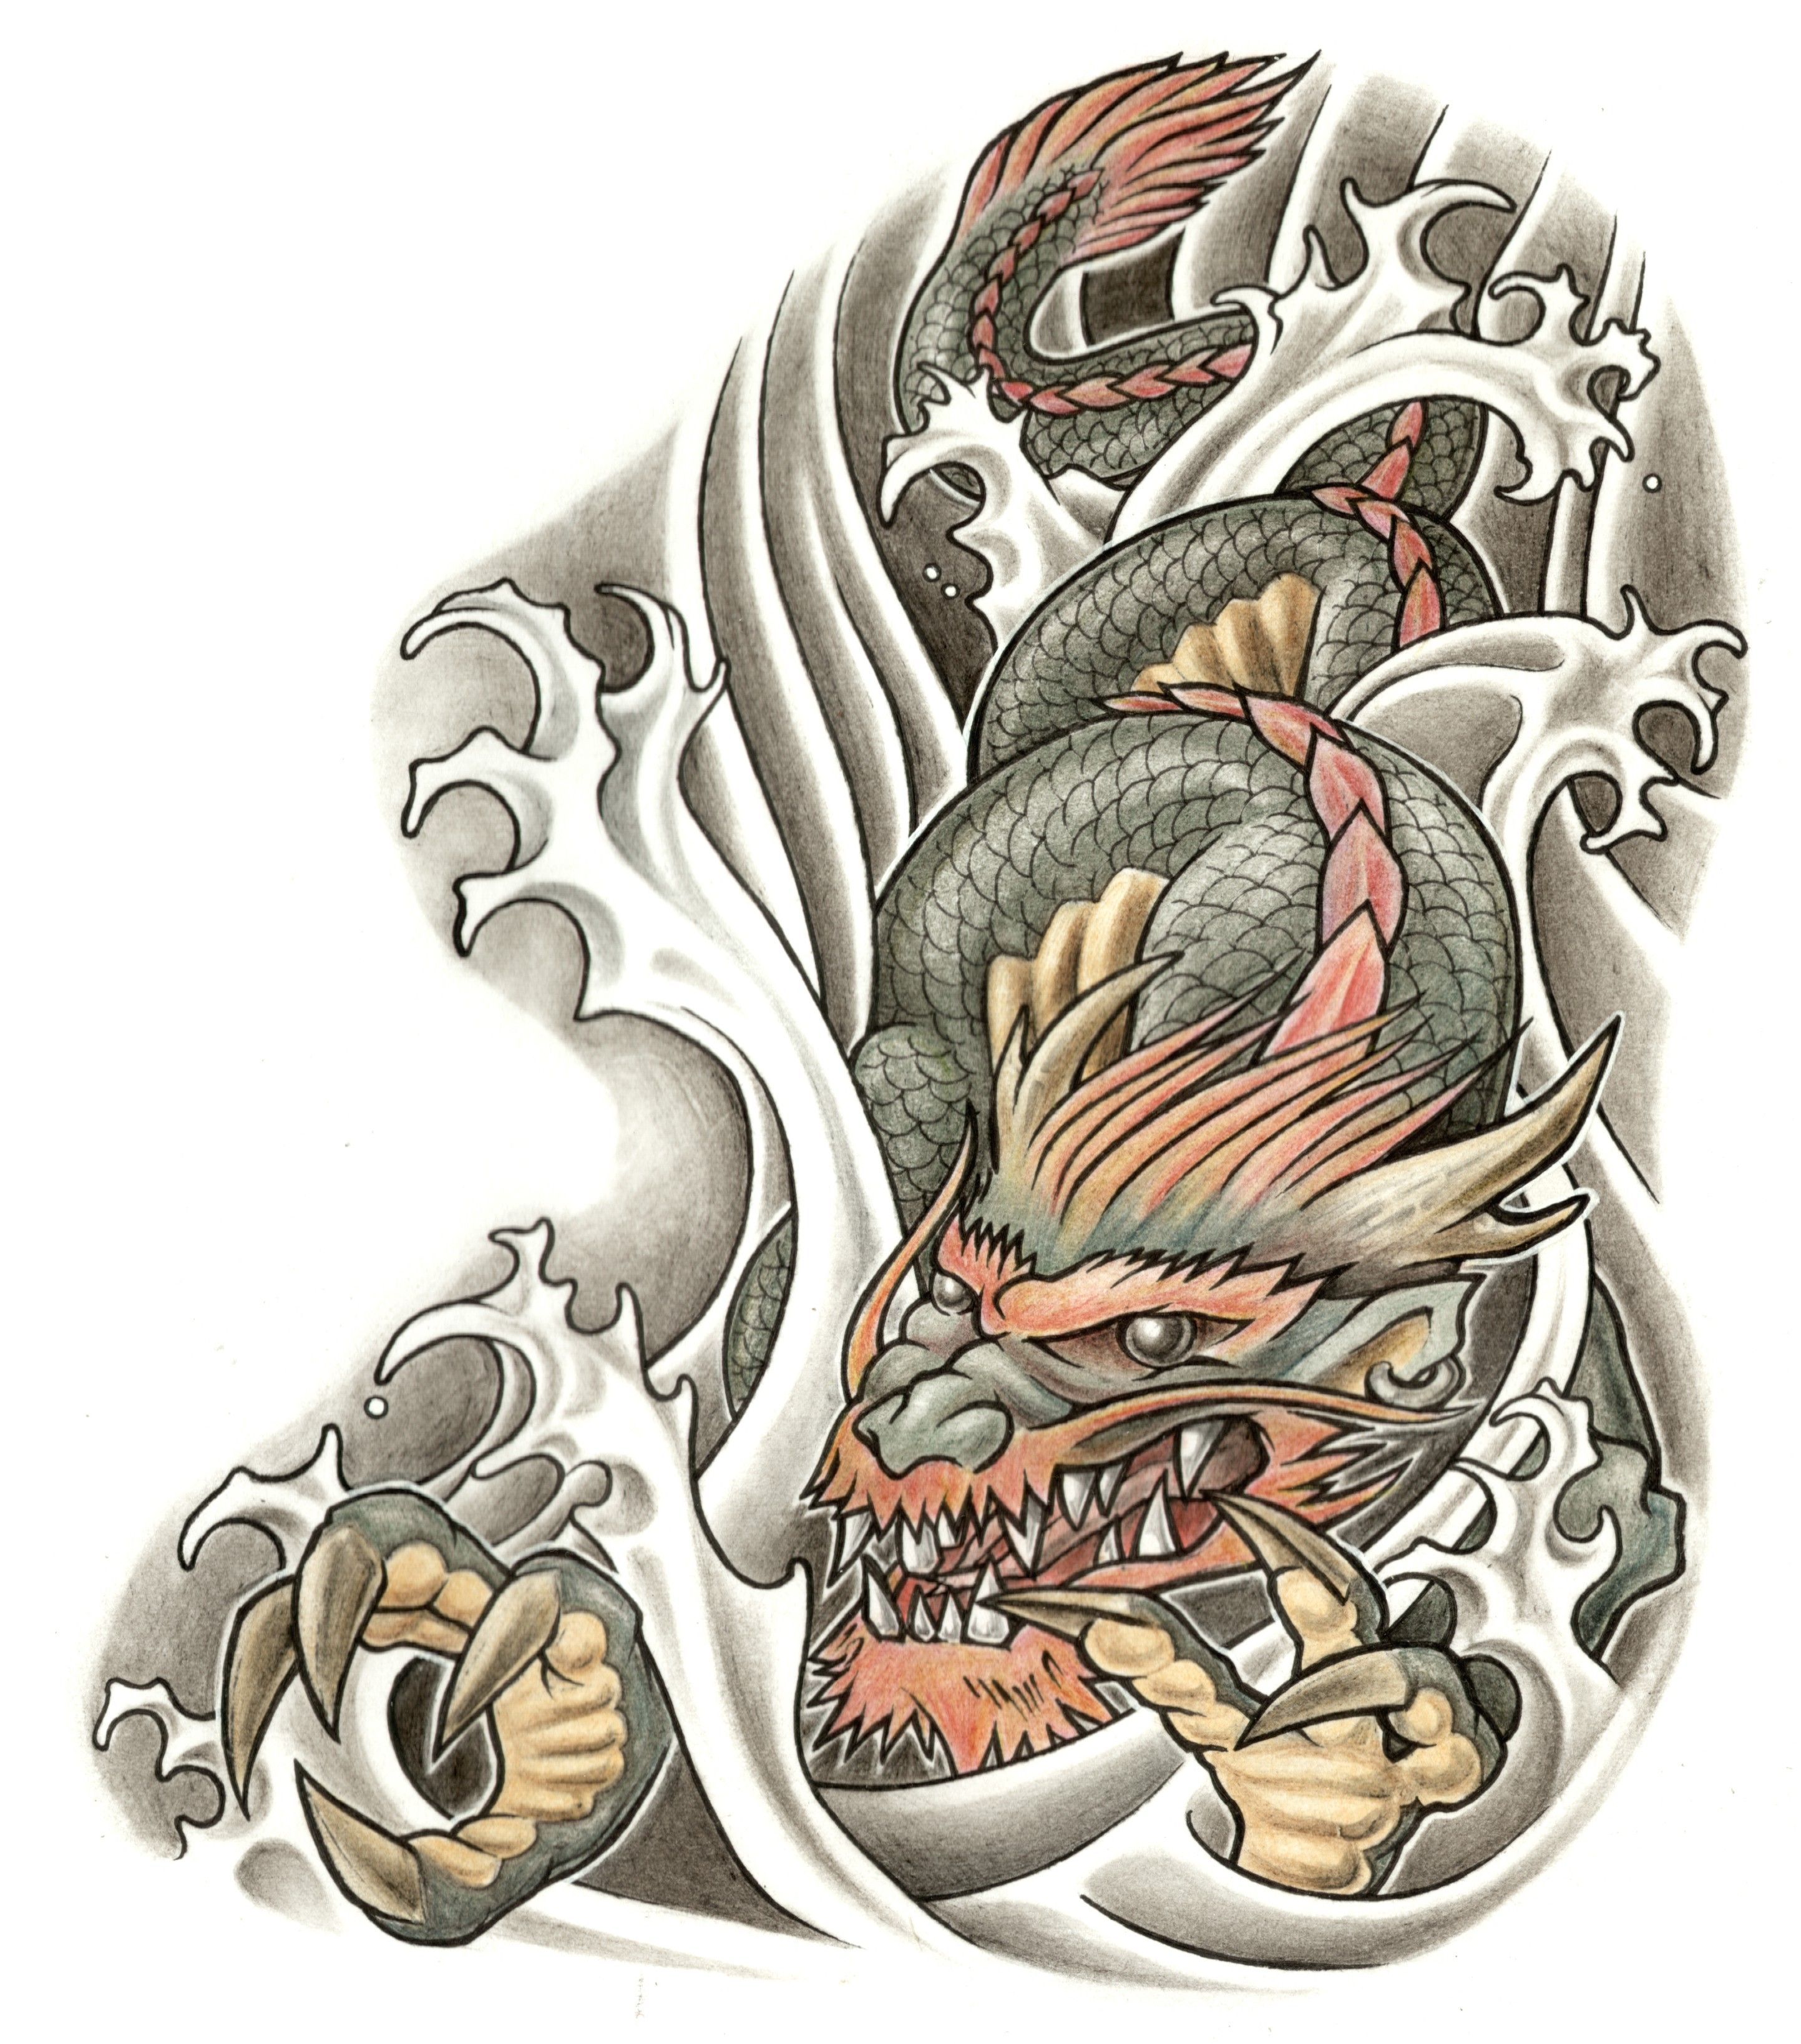 Gleaming Japanese Koi Dragon Tattoo Designs Picture 29. tats